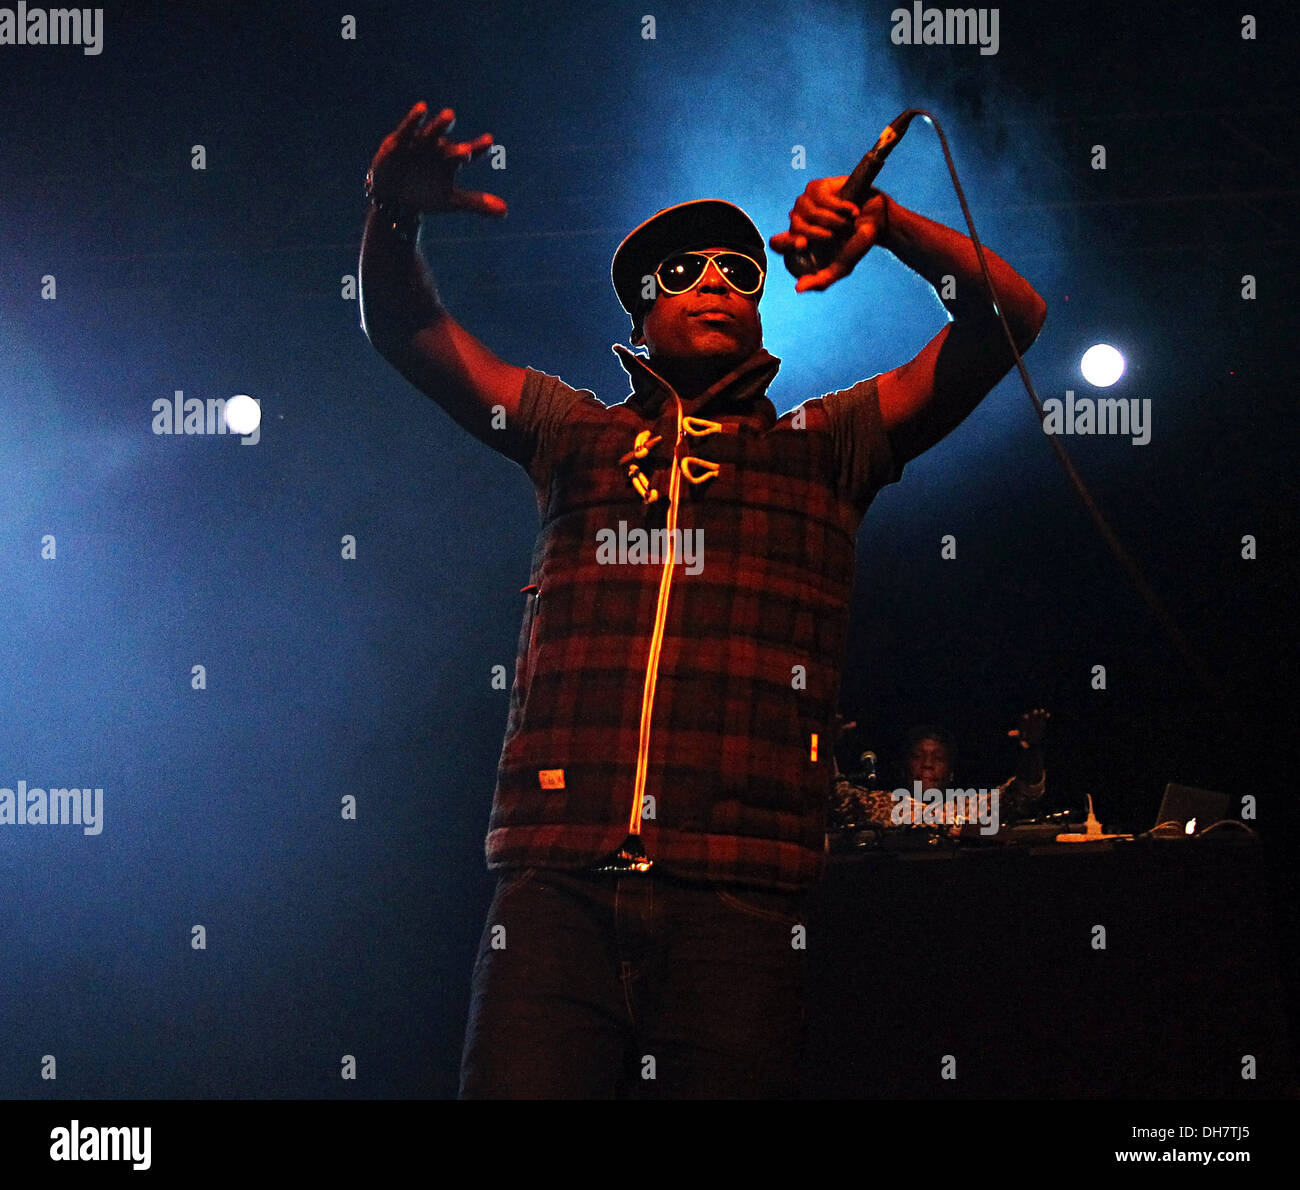 Brooklyn rapper Talib Kweli performing on stage at HMV Forum in Kentish Town London England - 20.03.12 Stock Photo